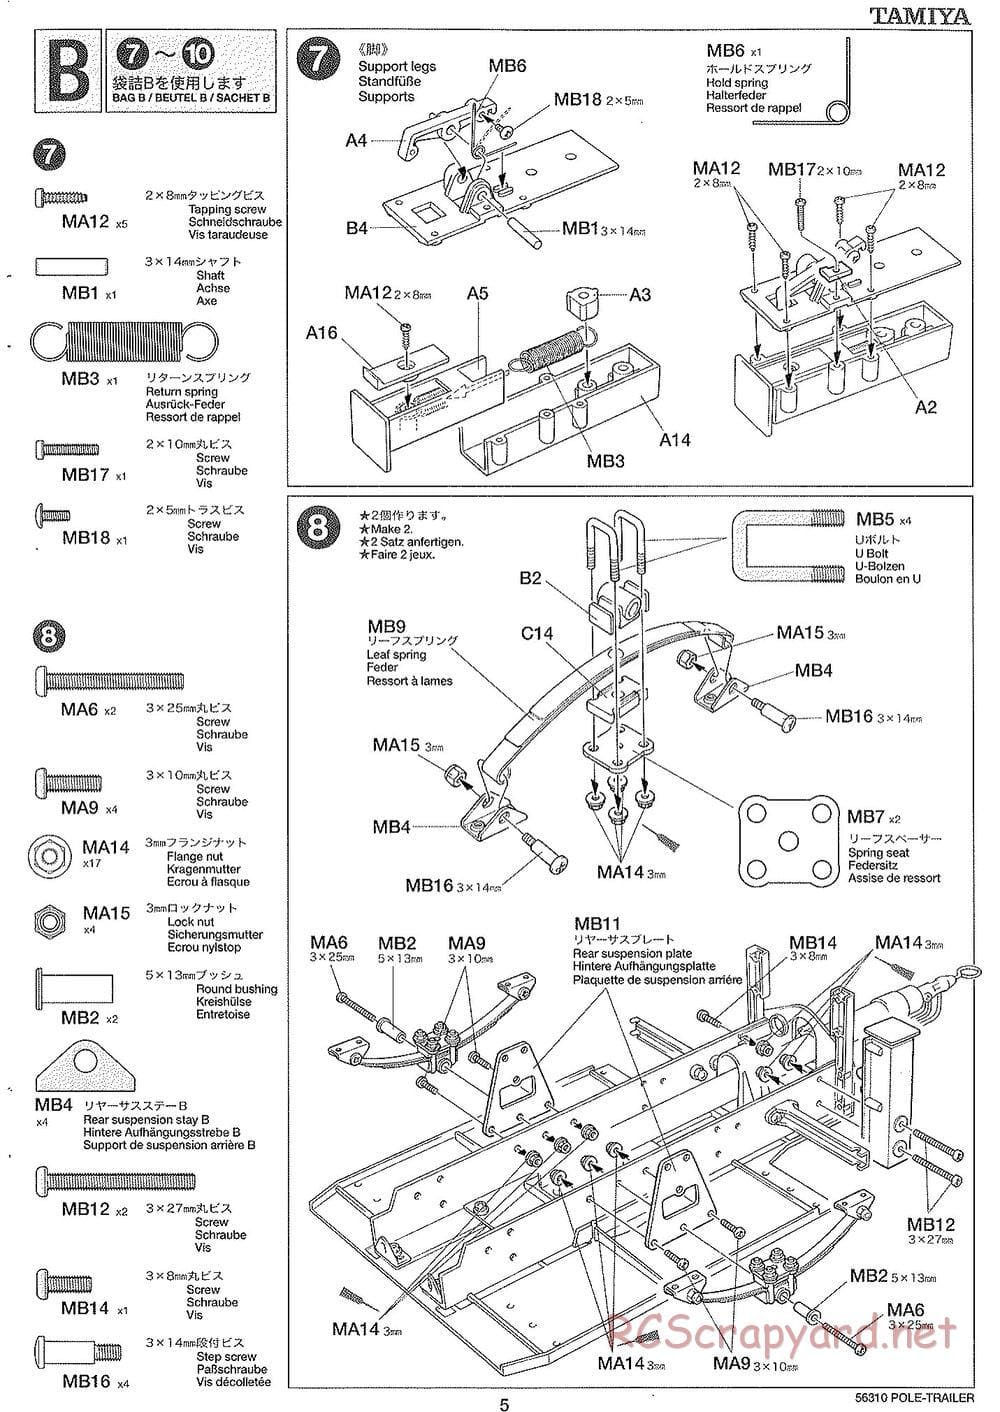 Tamiya - Semi Pole Trailer Chassis - Manual - Page 5